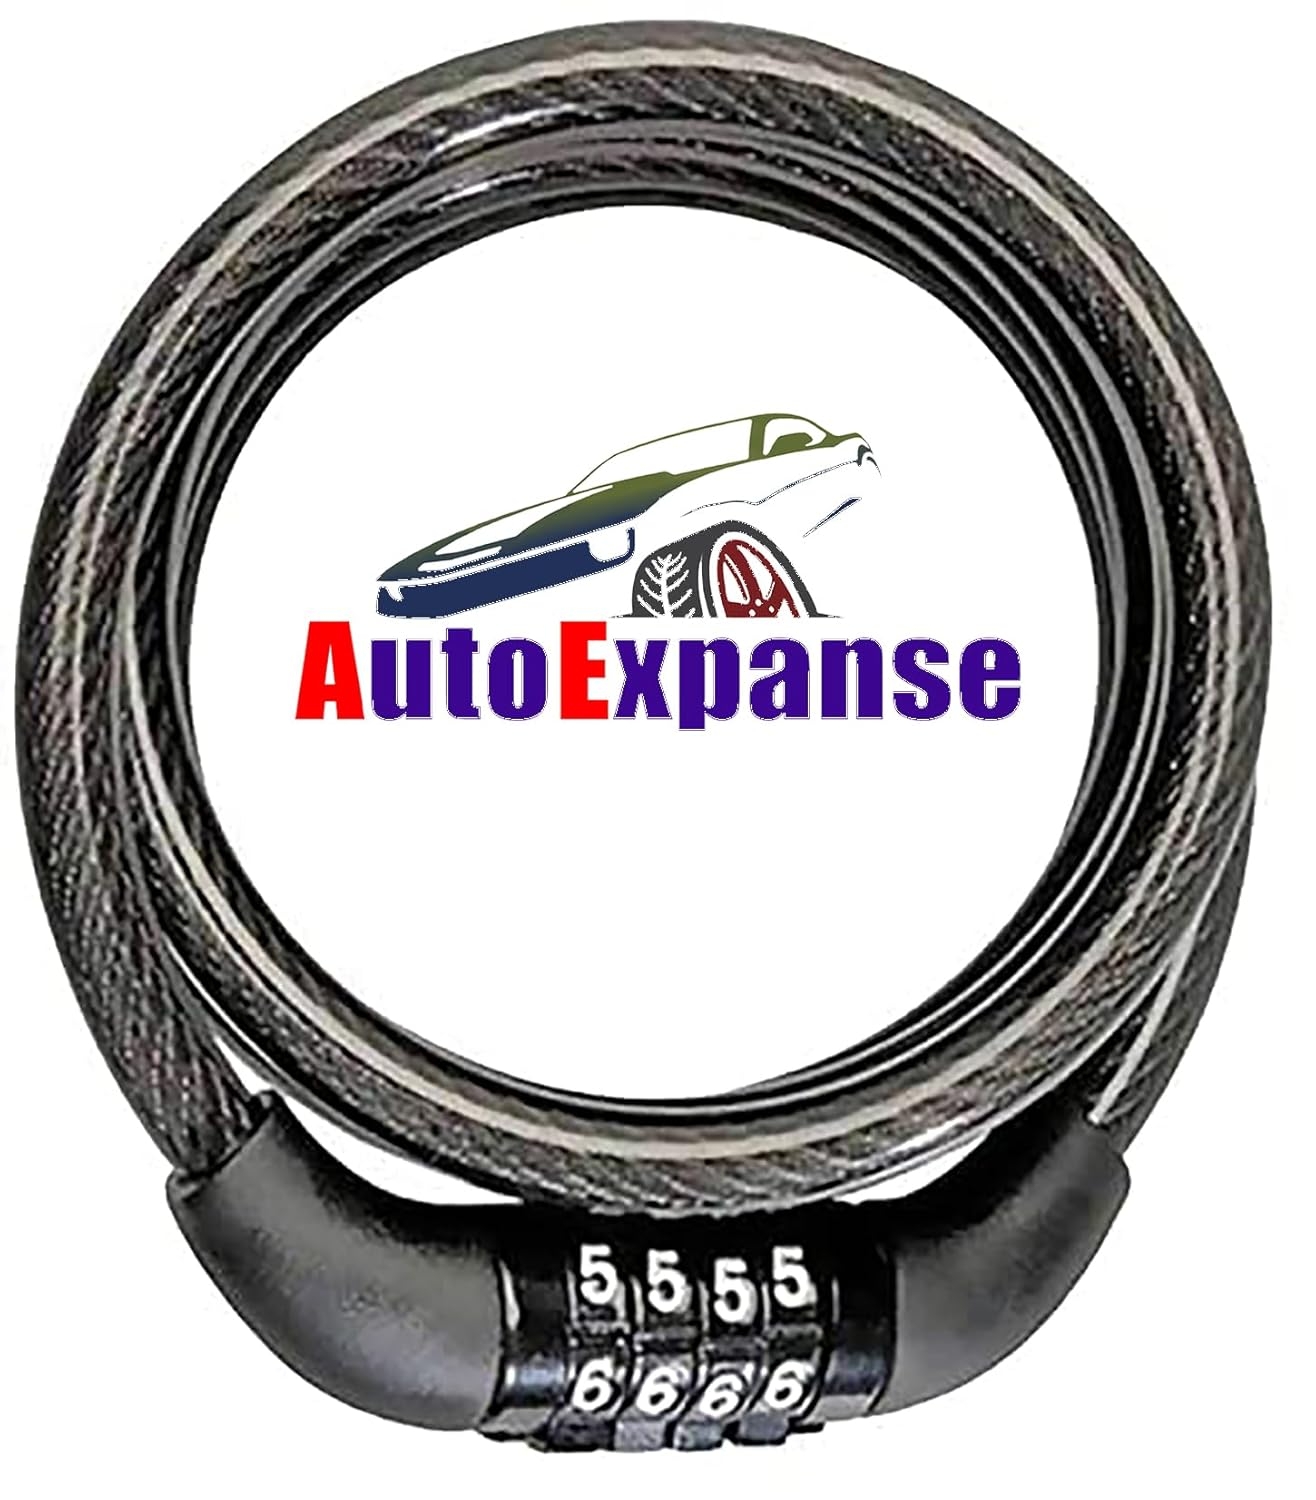 AutoExpanse Universal Number Chain Cable Lock Bike/Bycycle Helmet Lock Lock, Safety Number Lock Helmet Locks